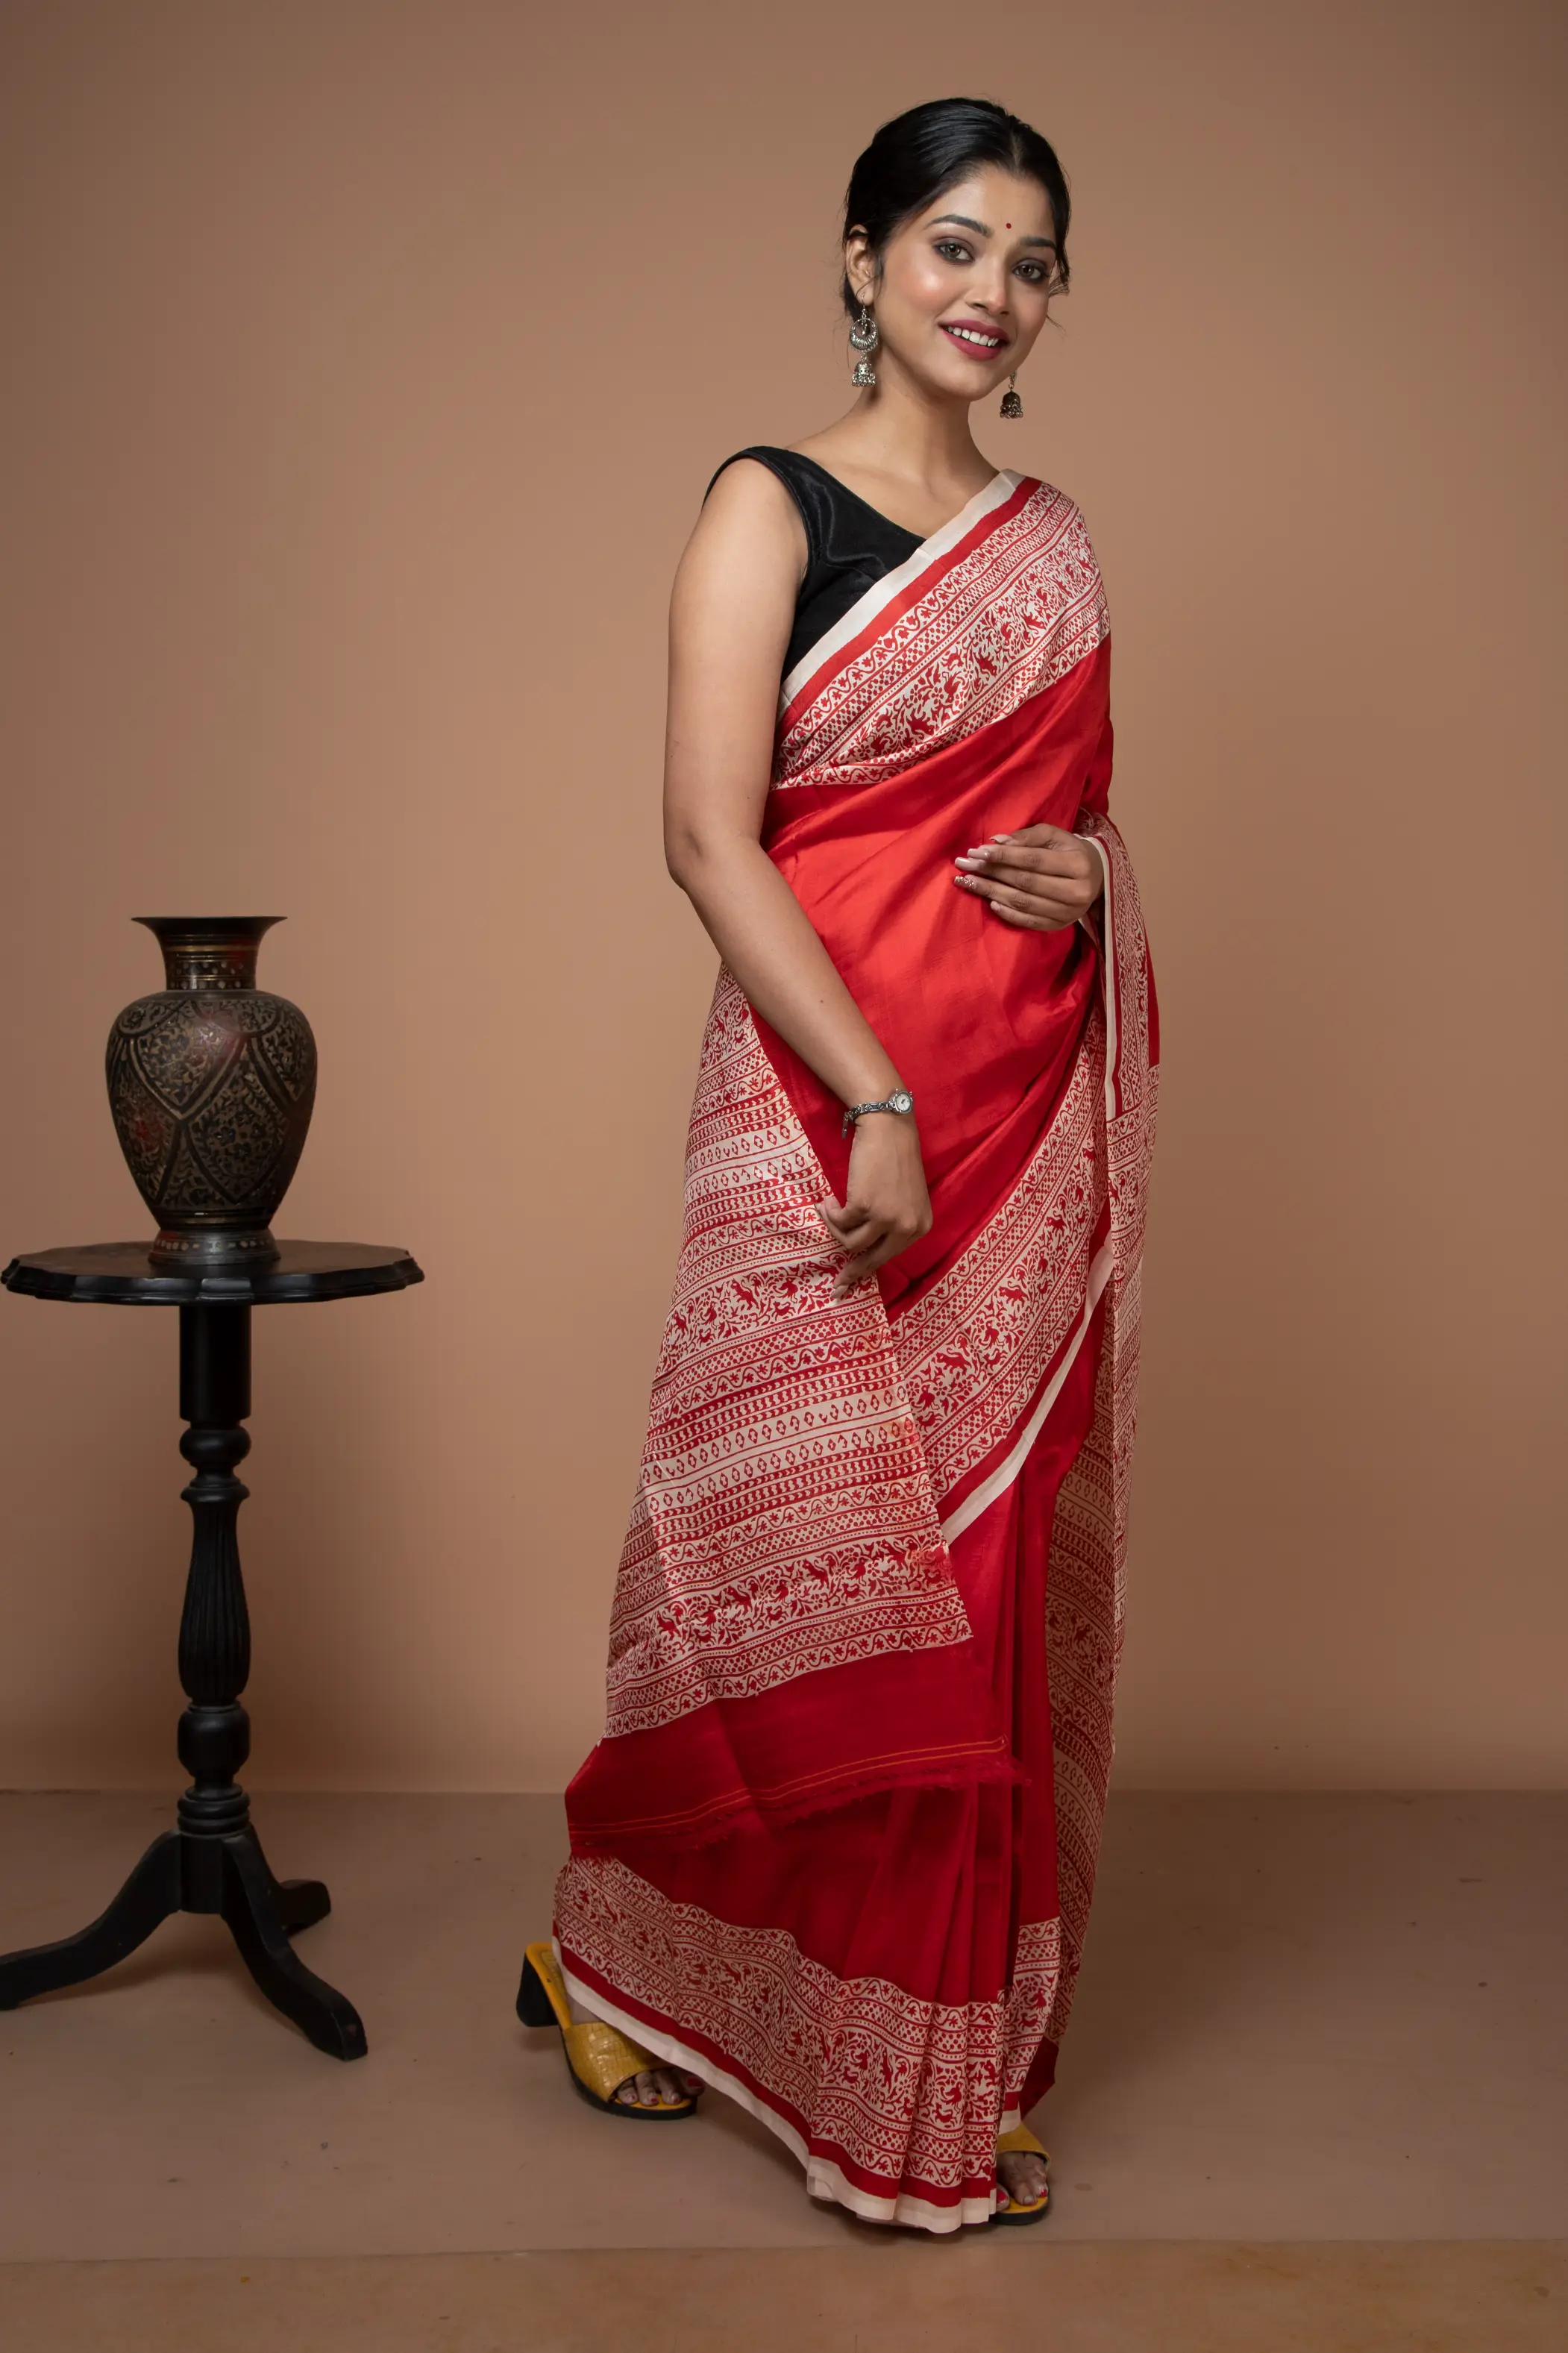 Buy the most beautiful red and white saree from Ramdhanu Ethnic-2 -Ramdhanu Ethnic